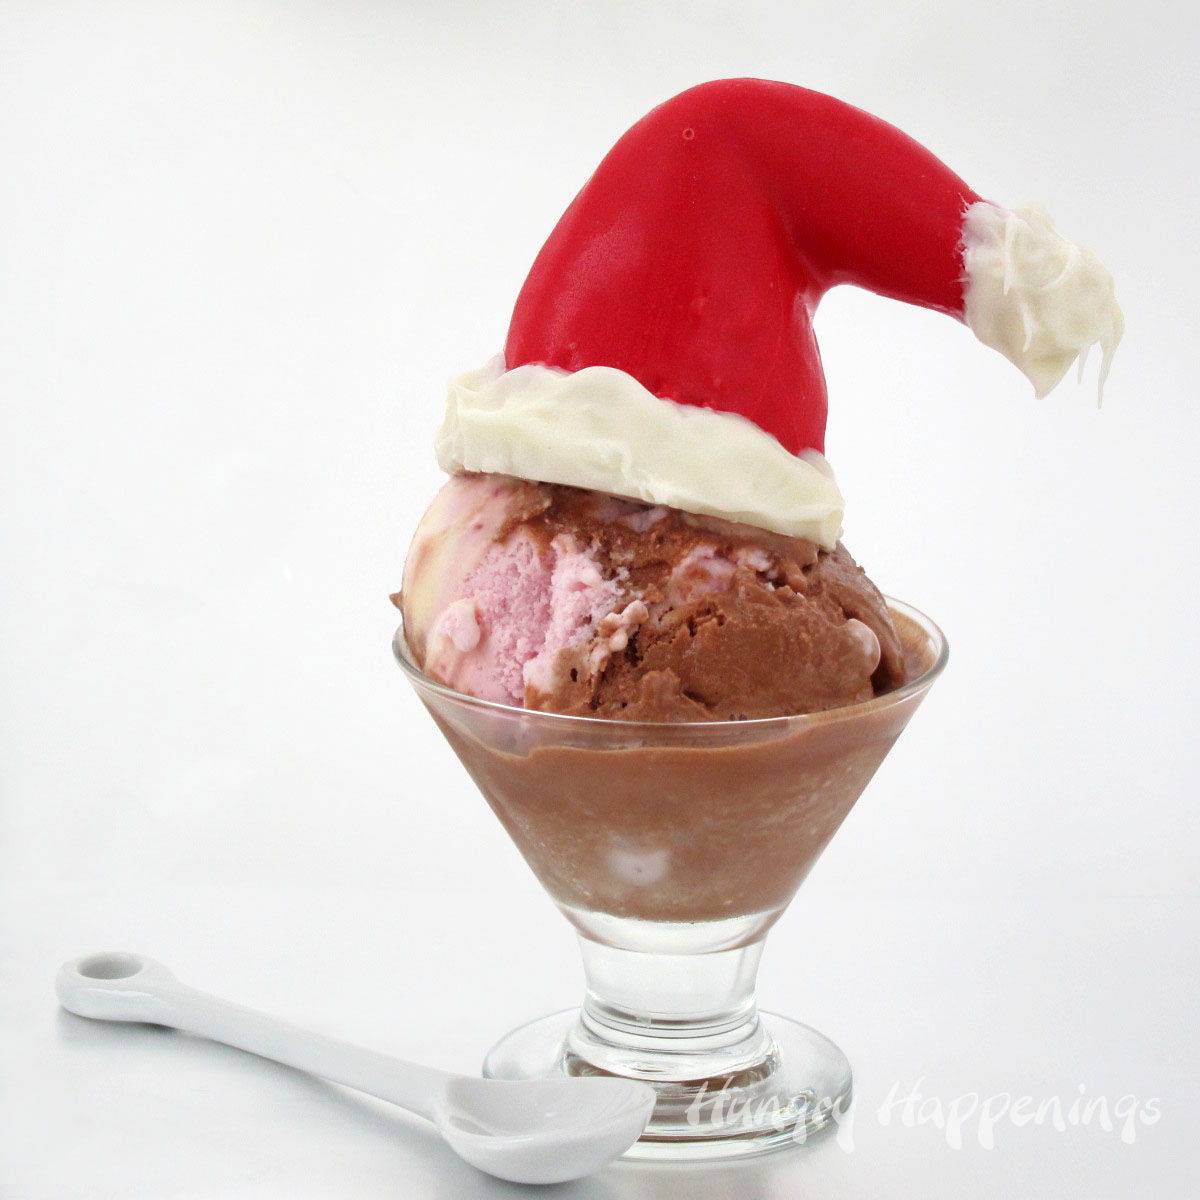 Image result for ice cream cone pics